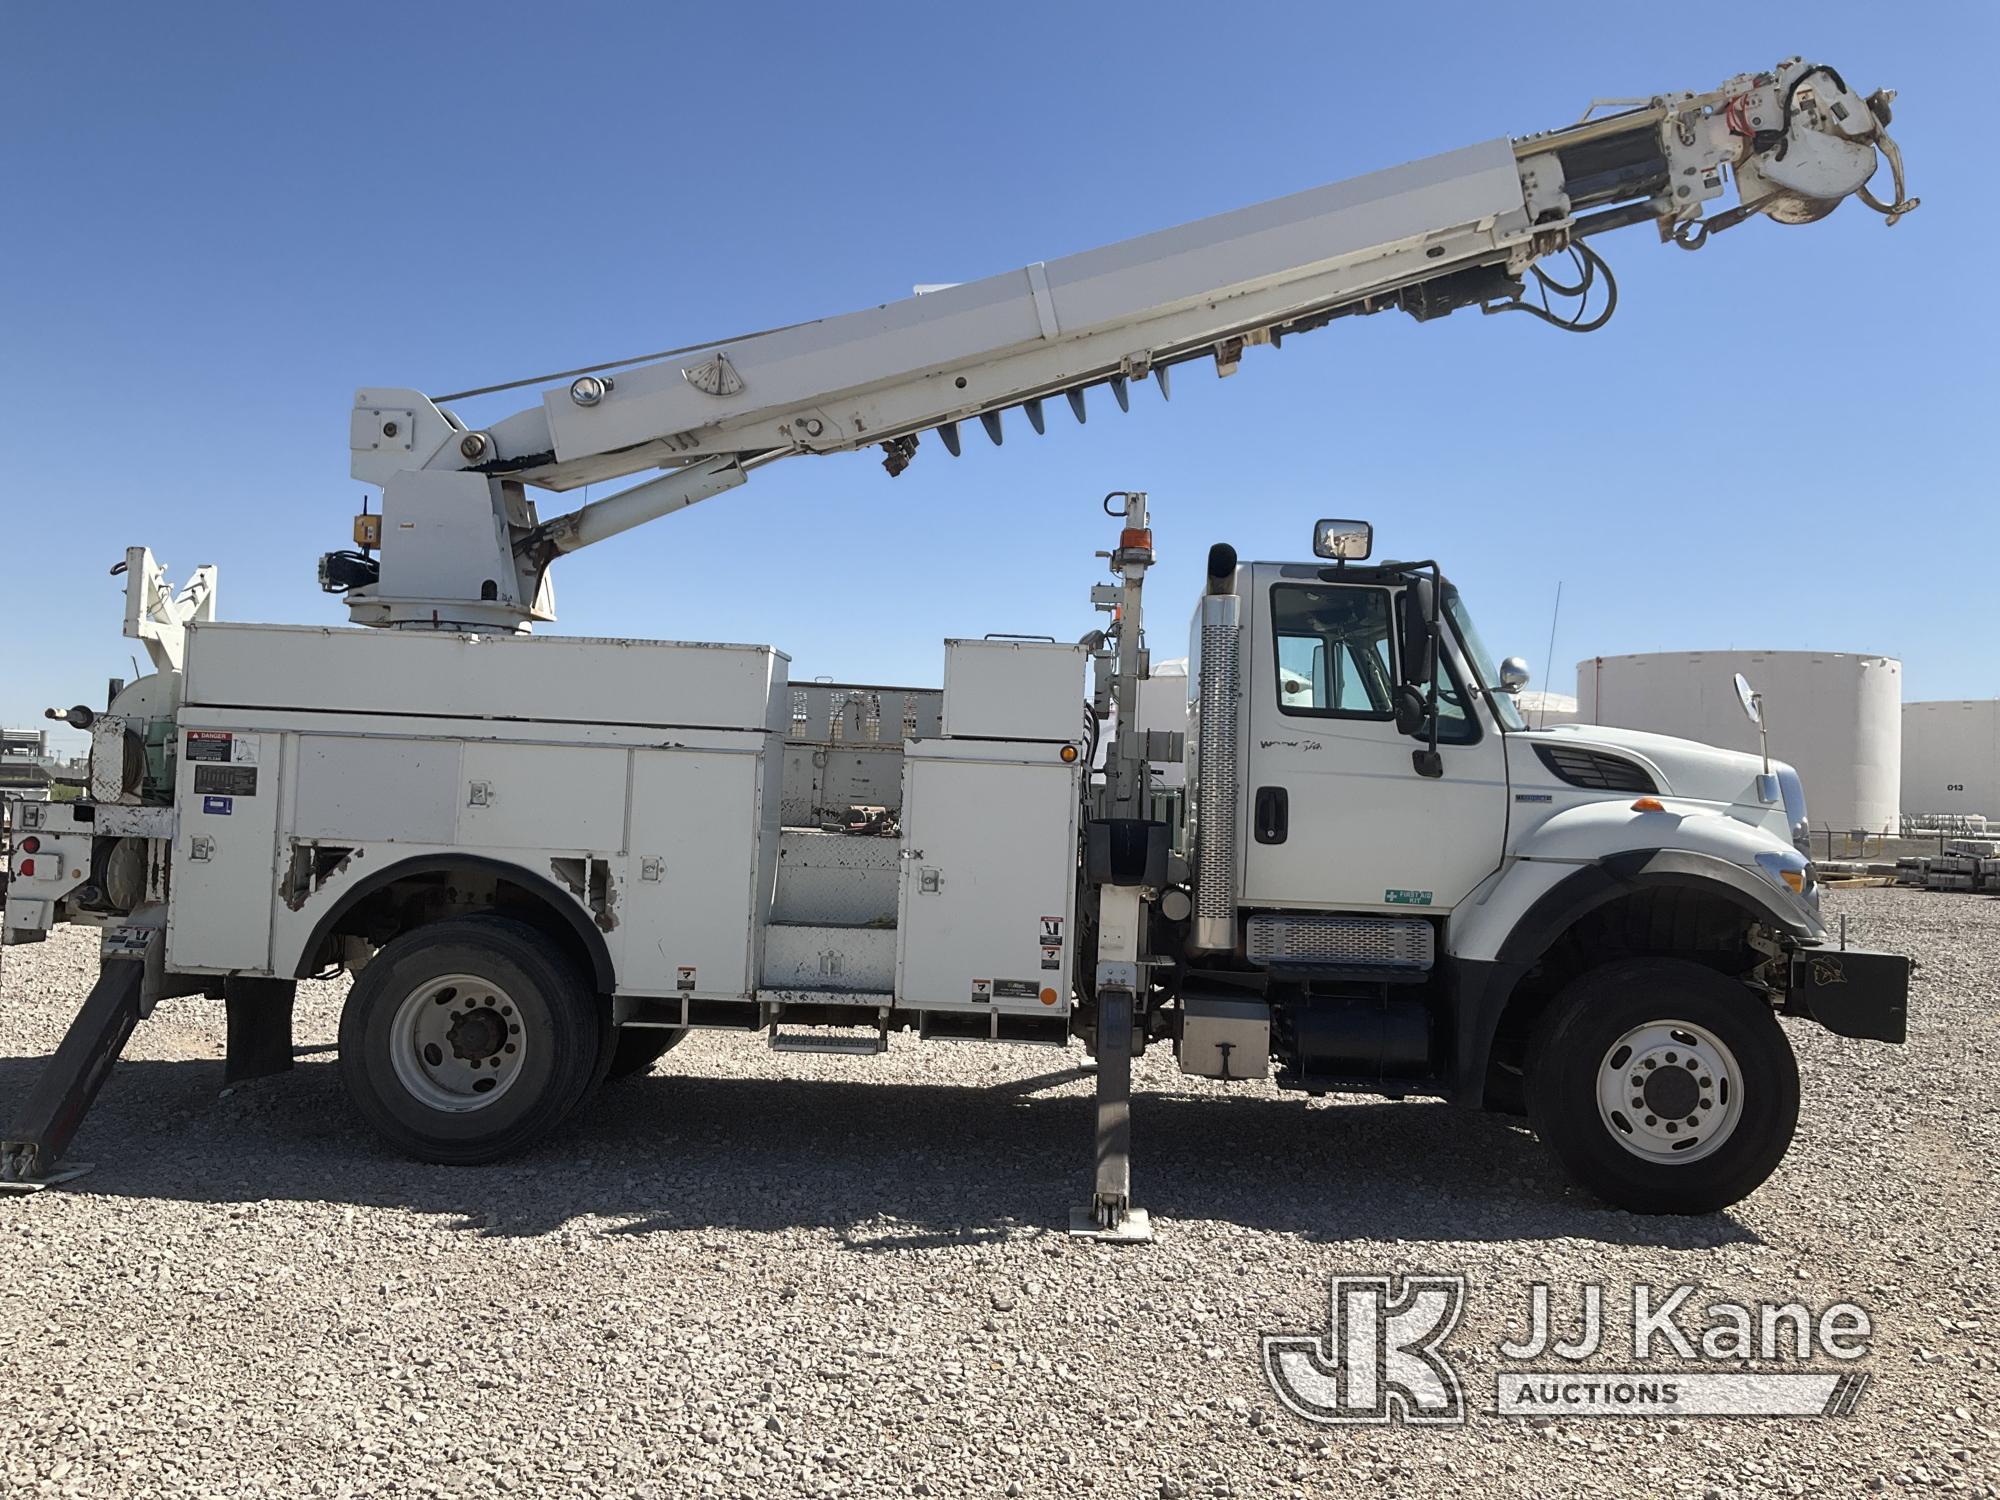 (El Paso, TX) Altec DM47-TR, Digger Derrick rear mounted on 2008 International 7400 4x4 Utility Truc